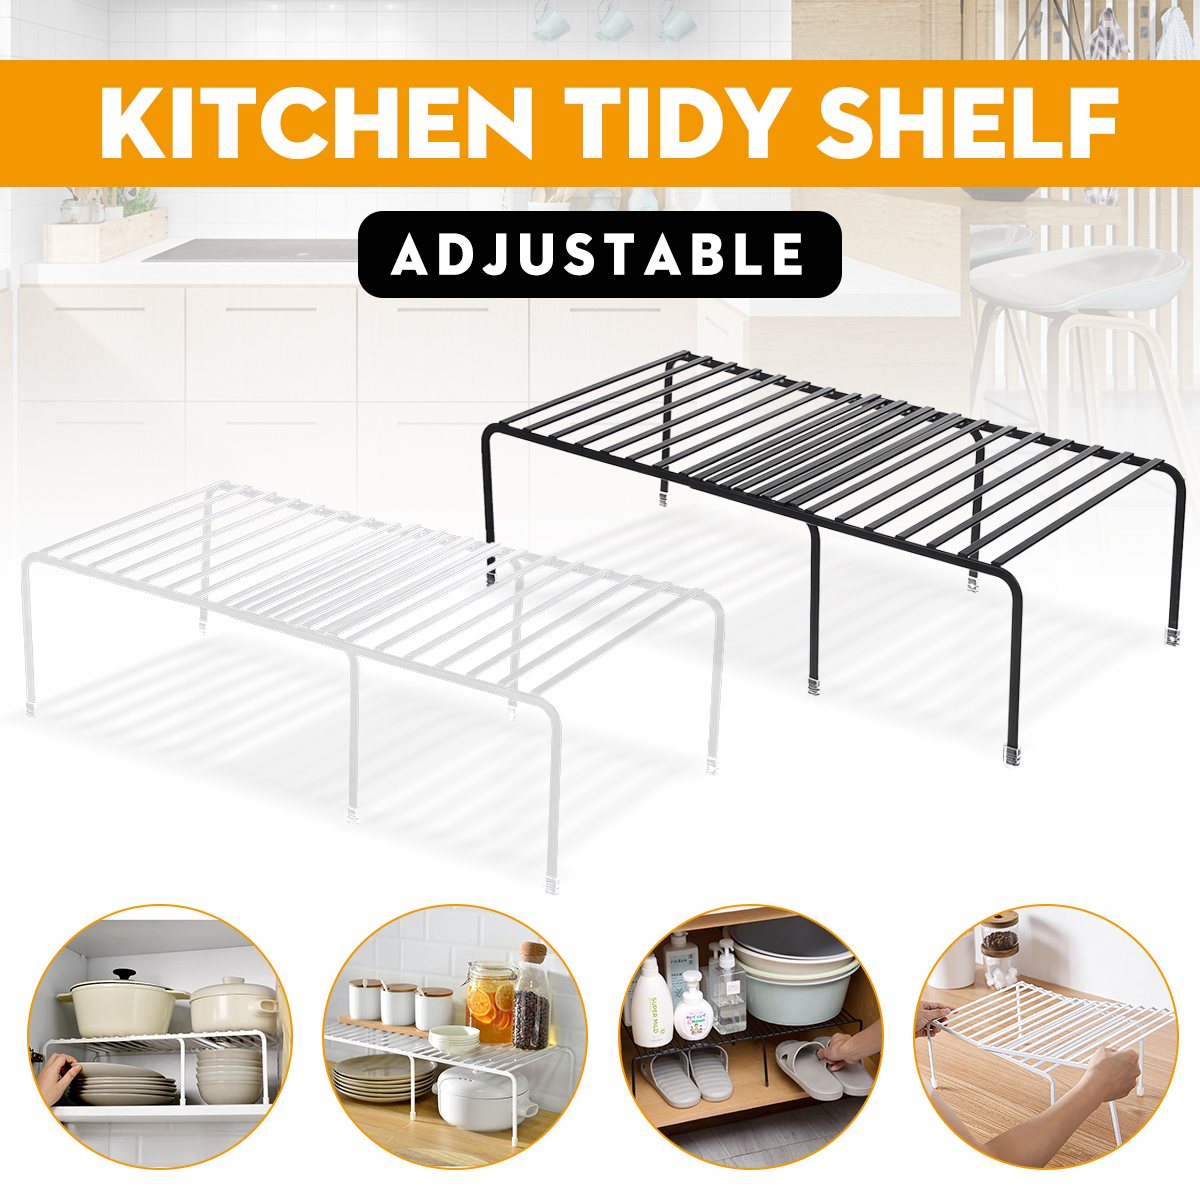 Adjustable-Sink-Shelf-Kitchen-Storage-Tidy-Rack-Cabinet-Metal-Iron-Bathroom-Multifunctional-Organize-1776566-1